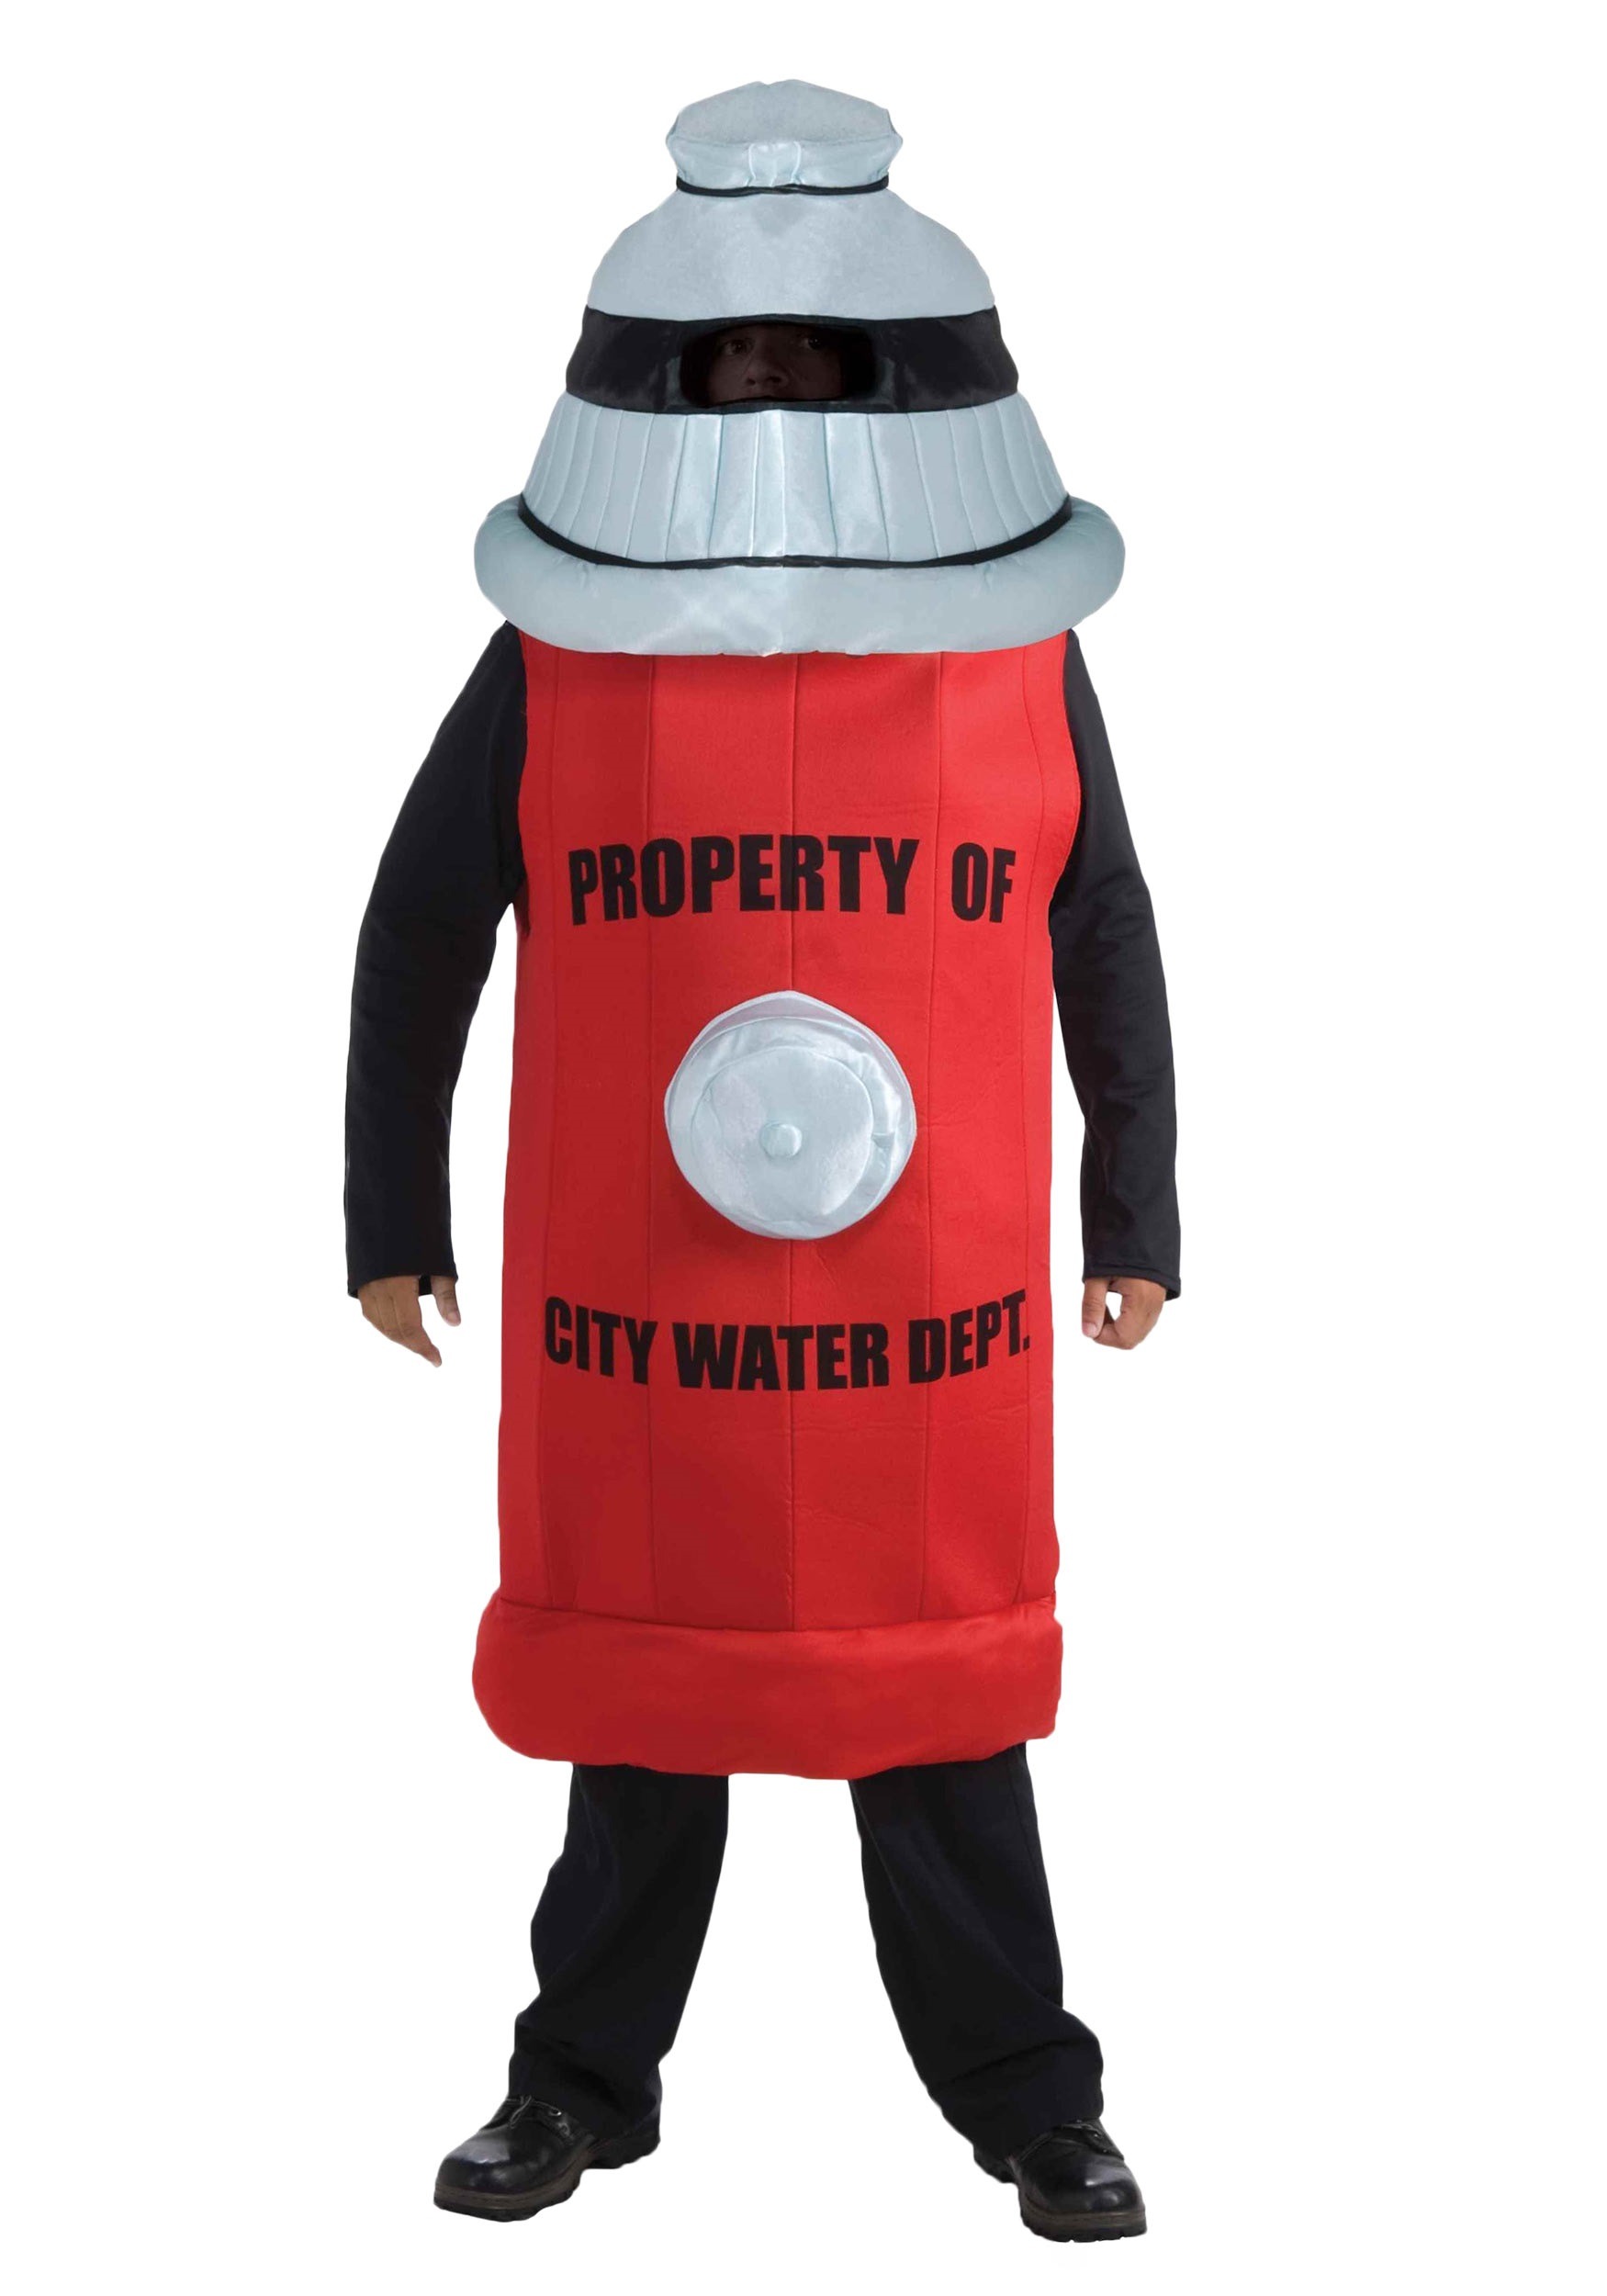 Fire Hydrant Costume